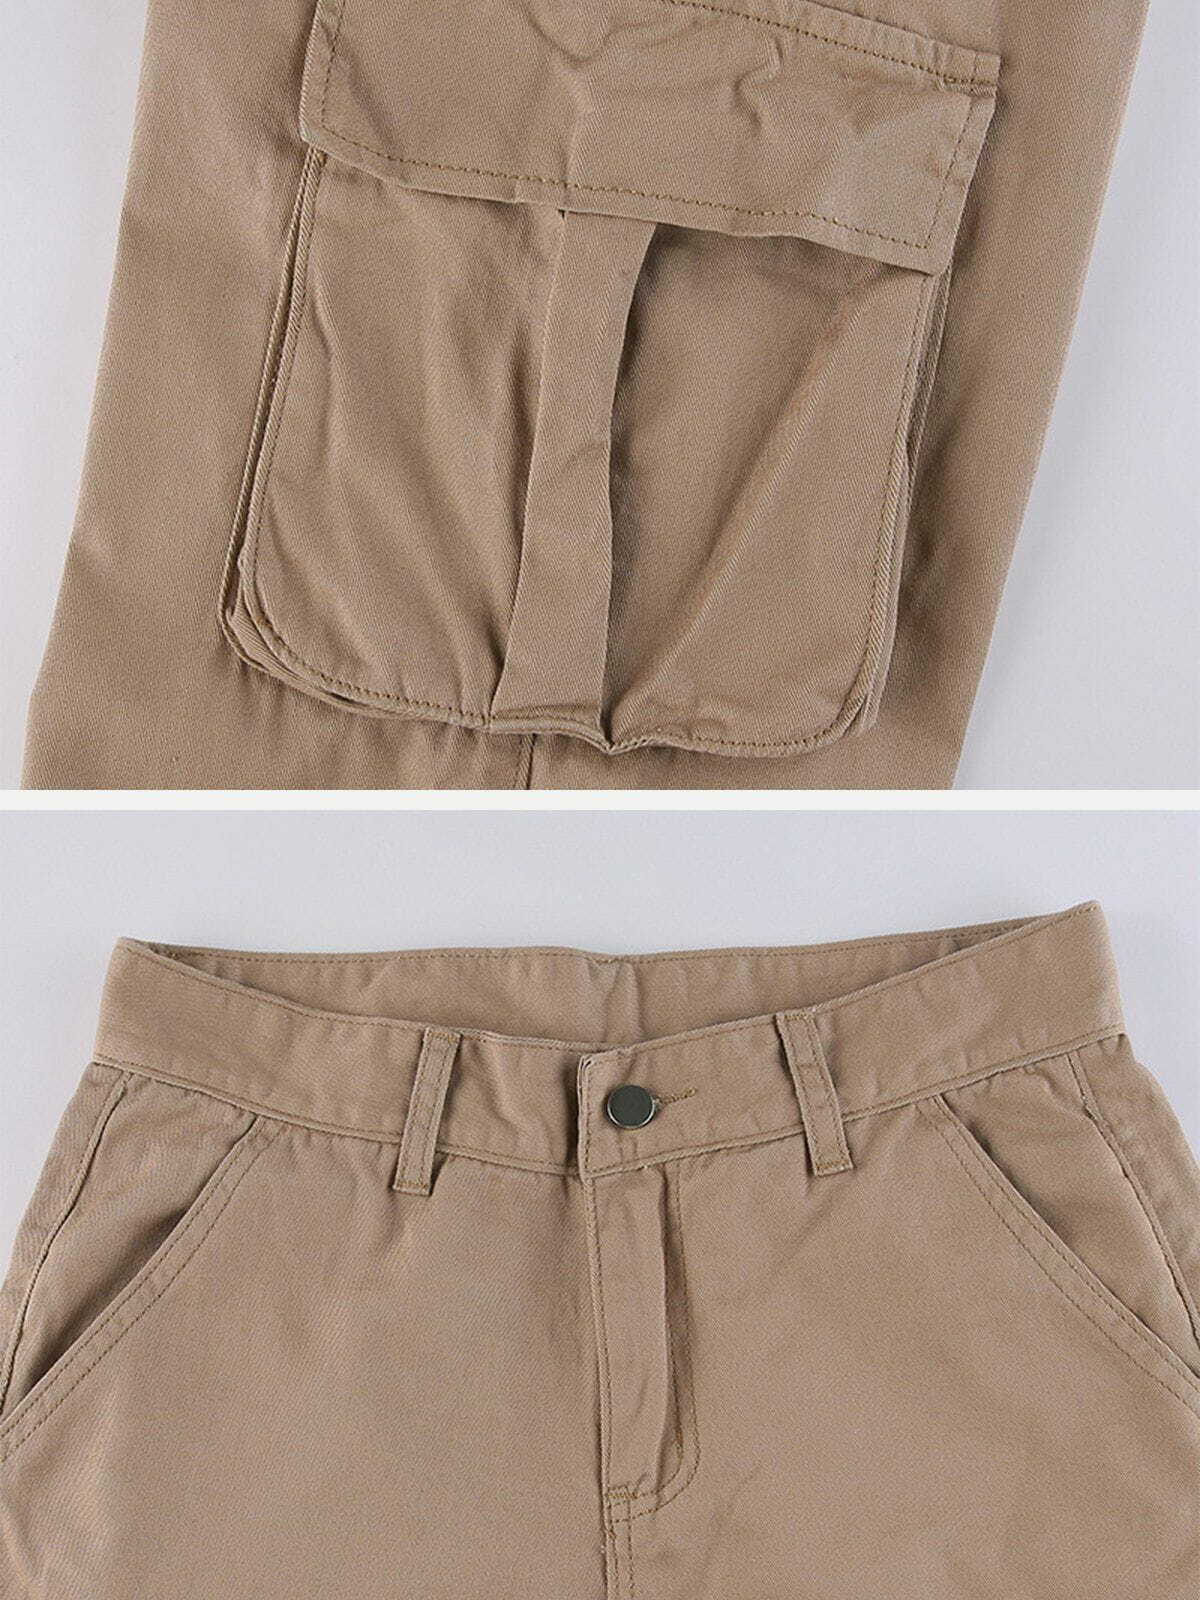 low waist cargo pants edgy & innovative streetwear 4973